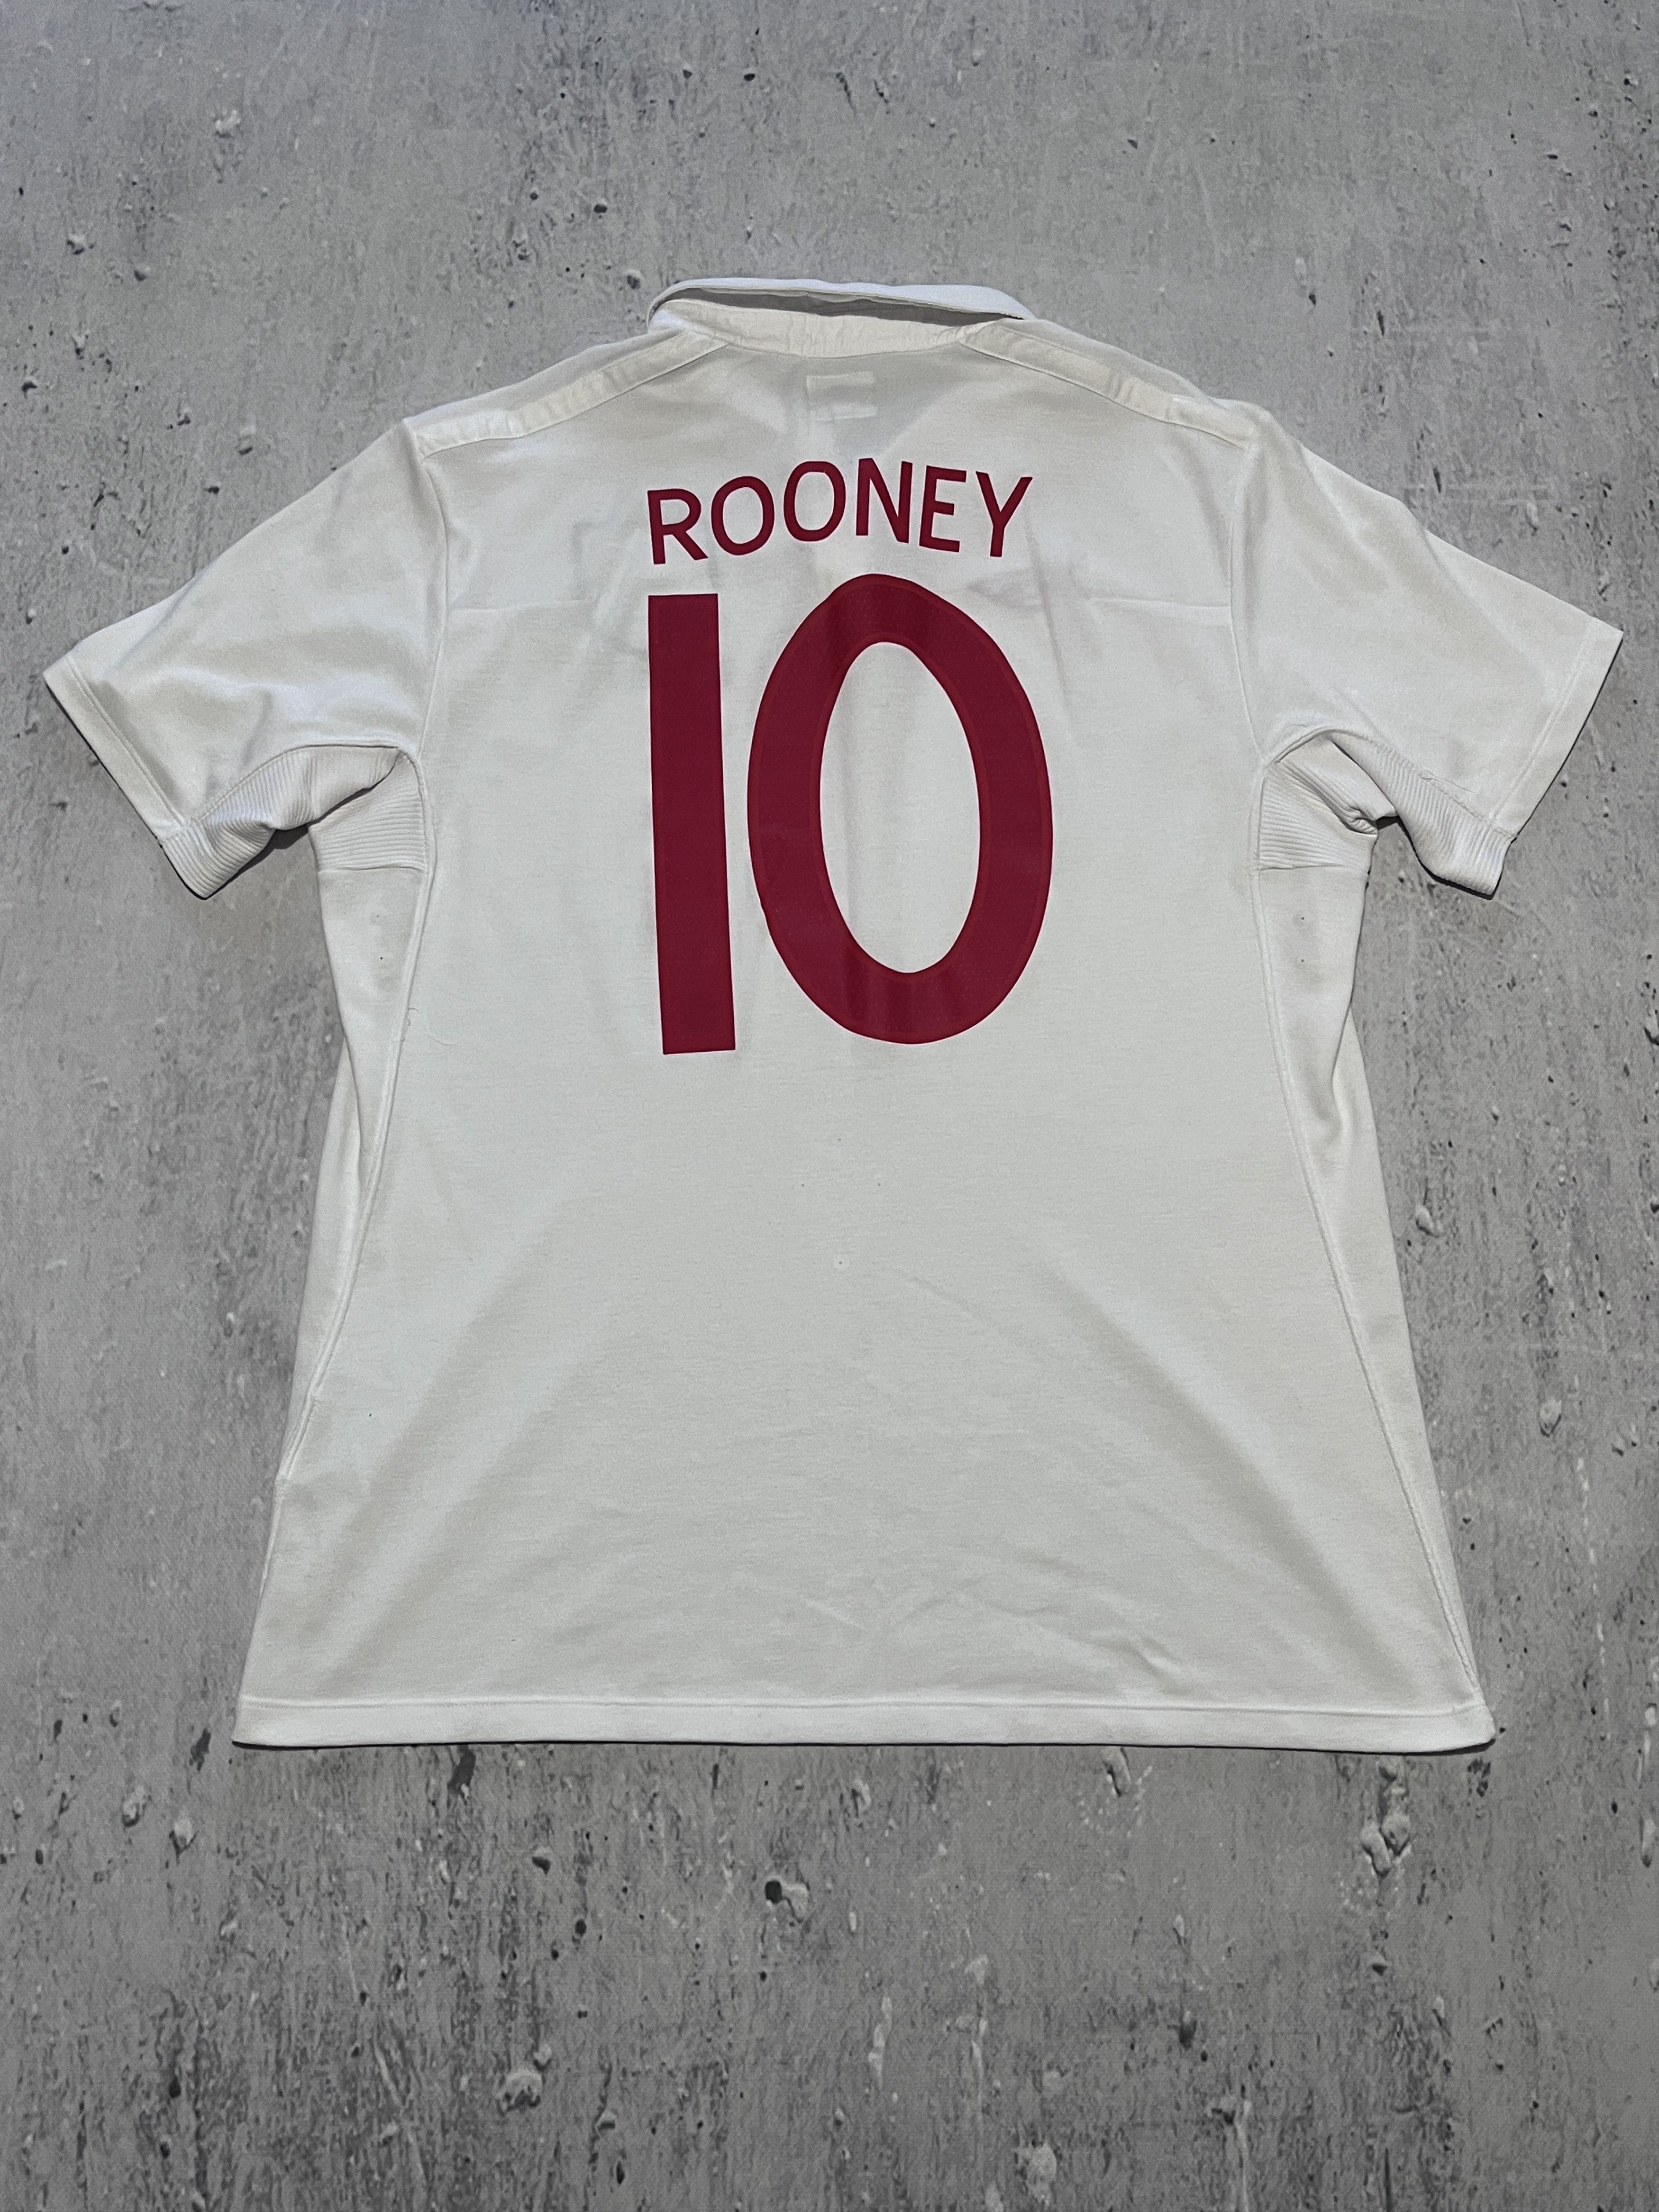 Umbro Umbro England 2010 home Rooney jersey Size US L / EU 52-54 / 3 - 2 Preview